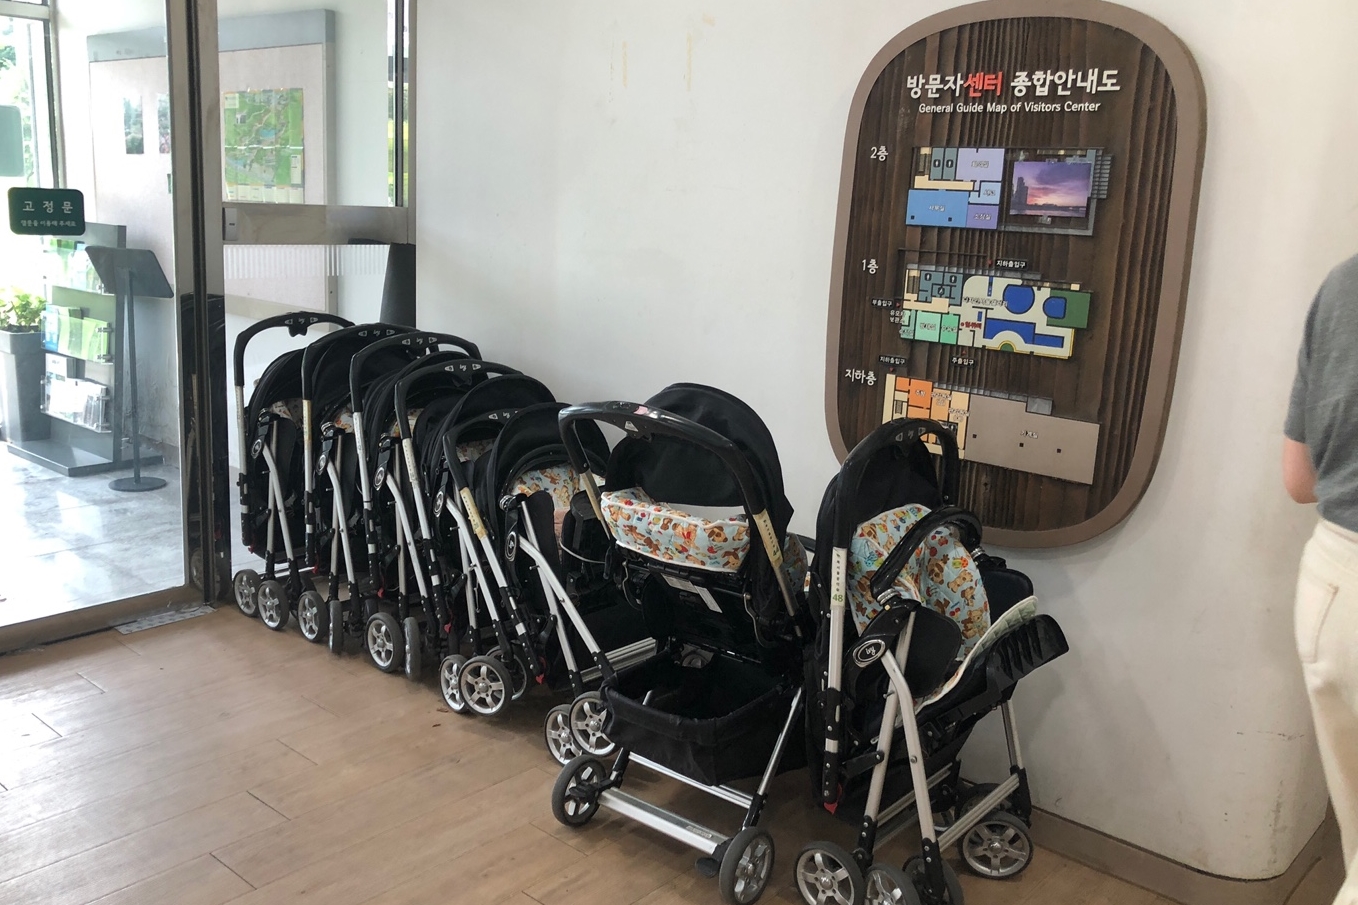 Information board/ Information desk0 : Neatly arranged strollers for rental
